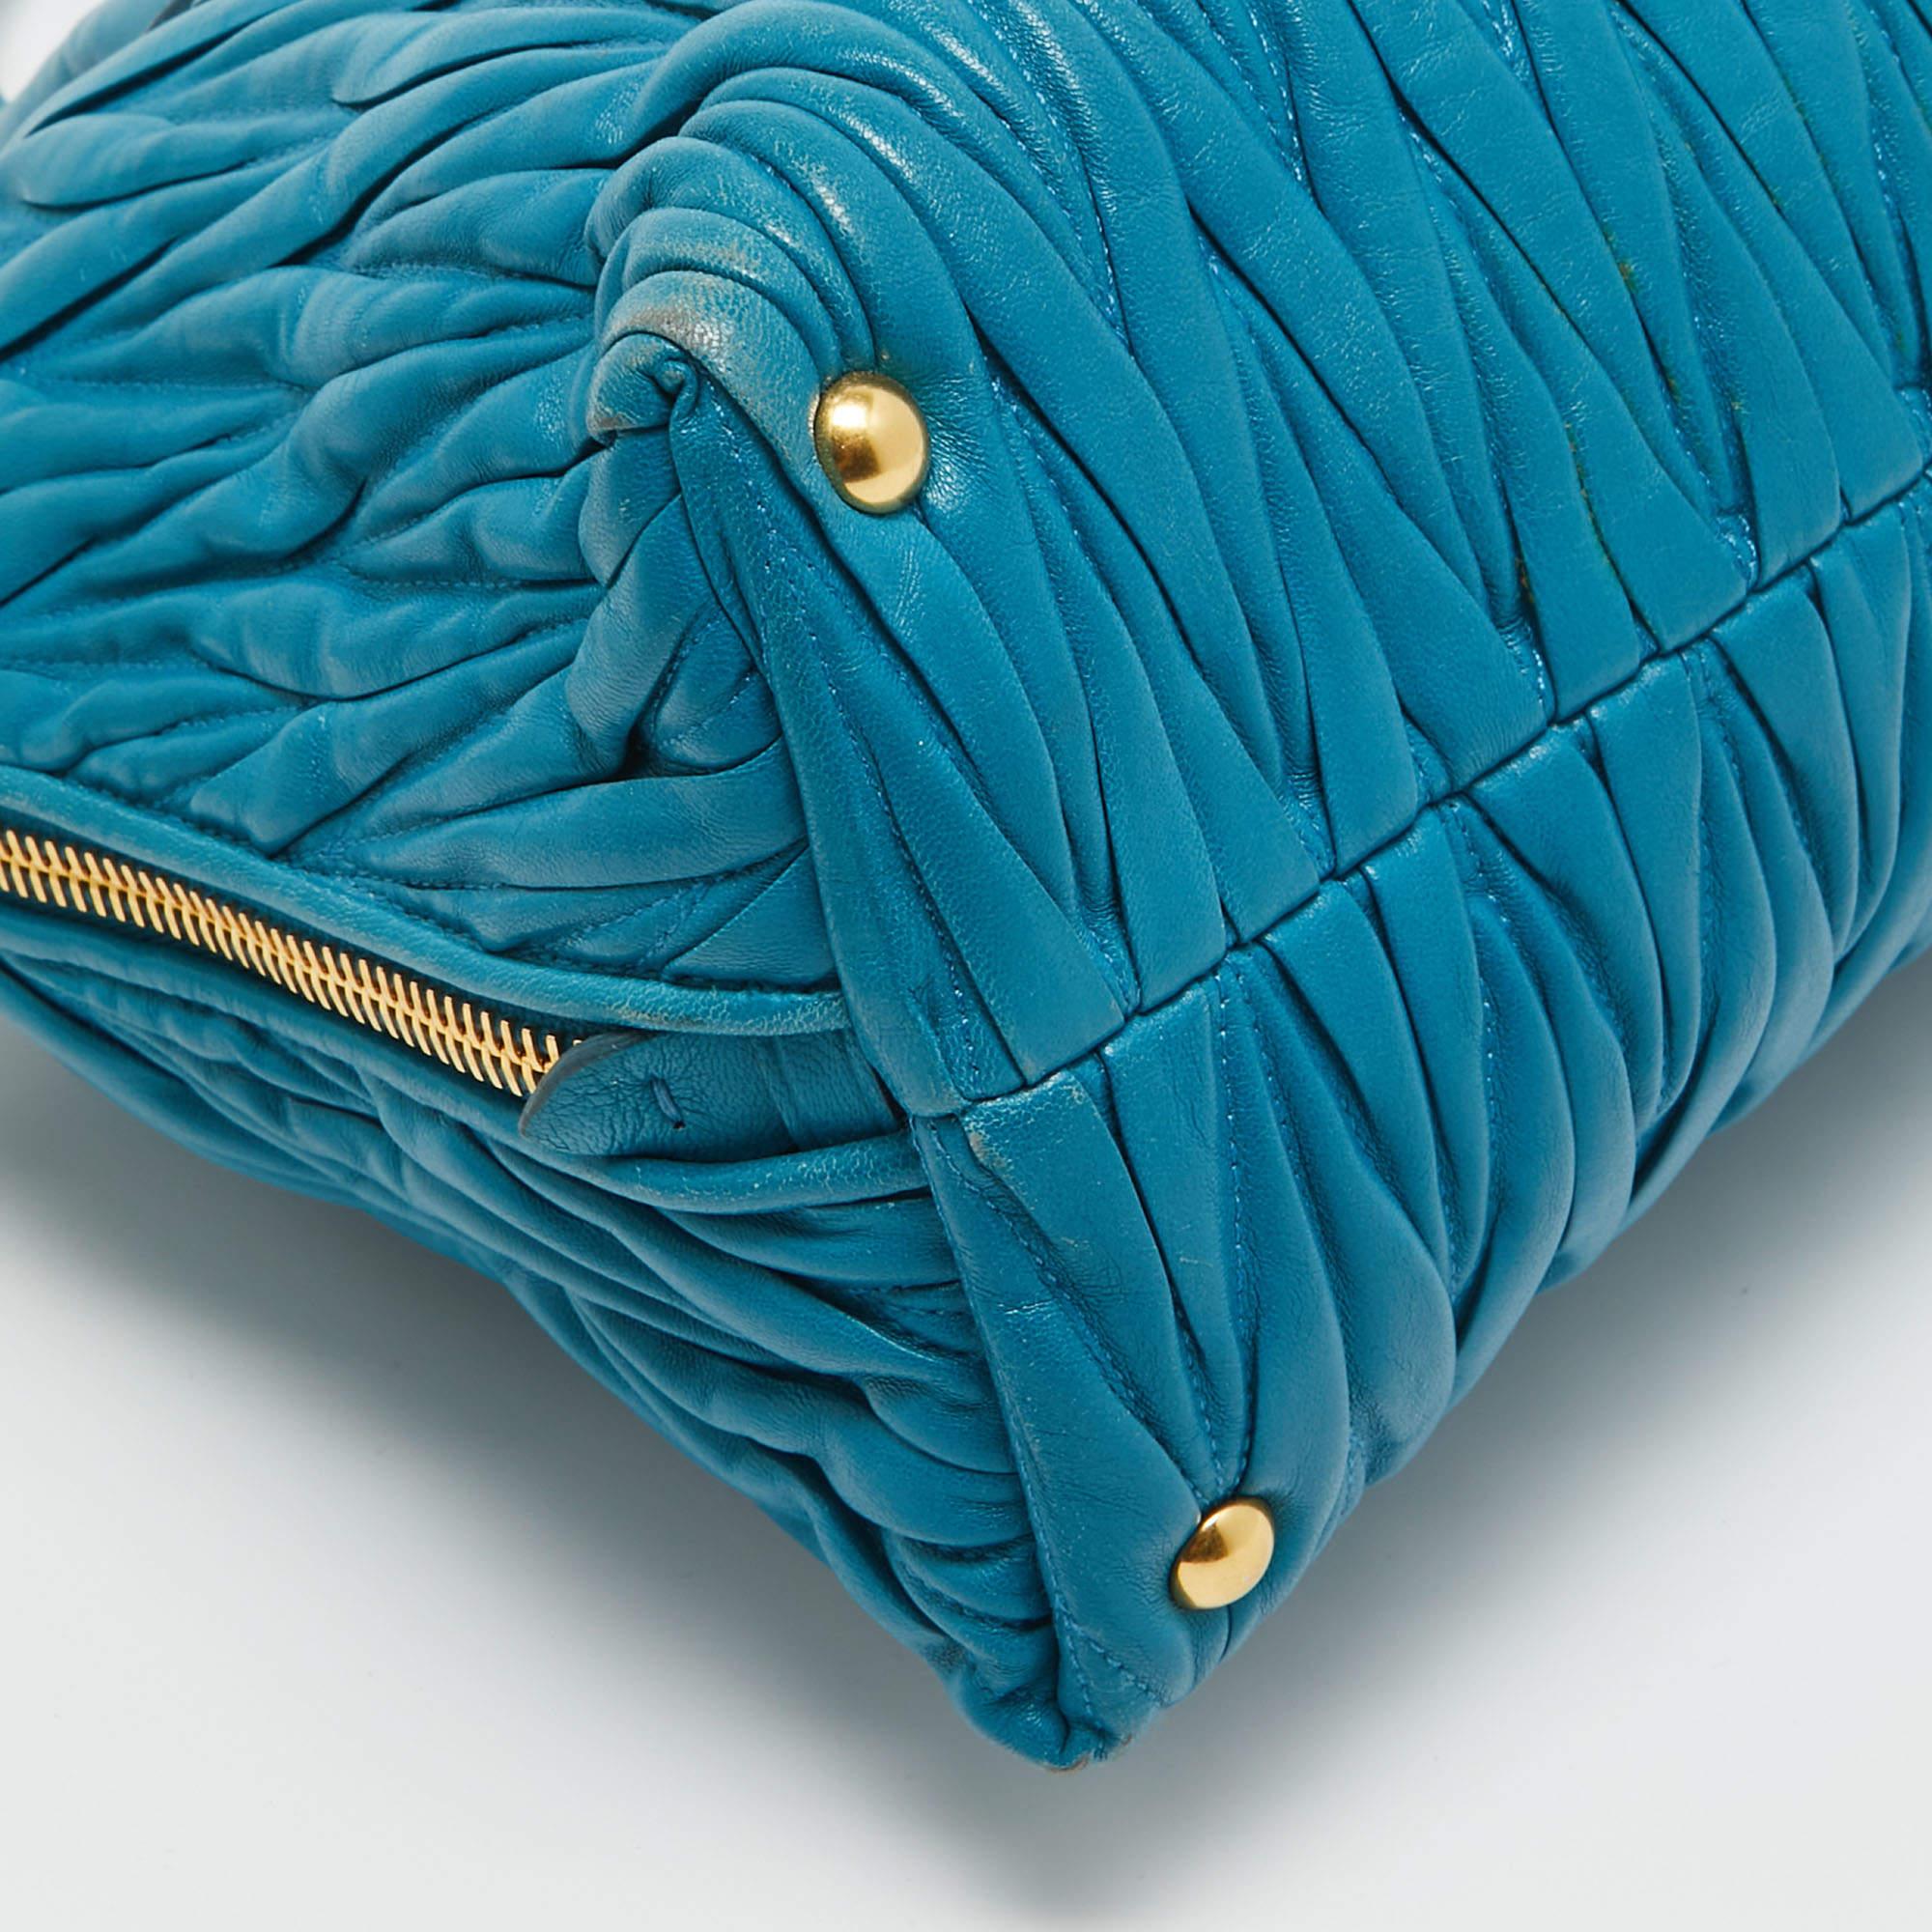 Miu Miu Teal Blue Matelassé Leather Top Zip Tote For Sale 6